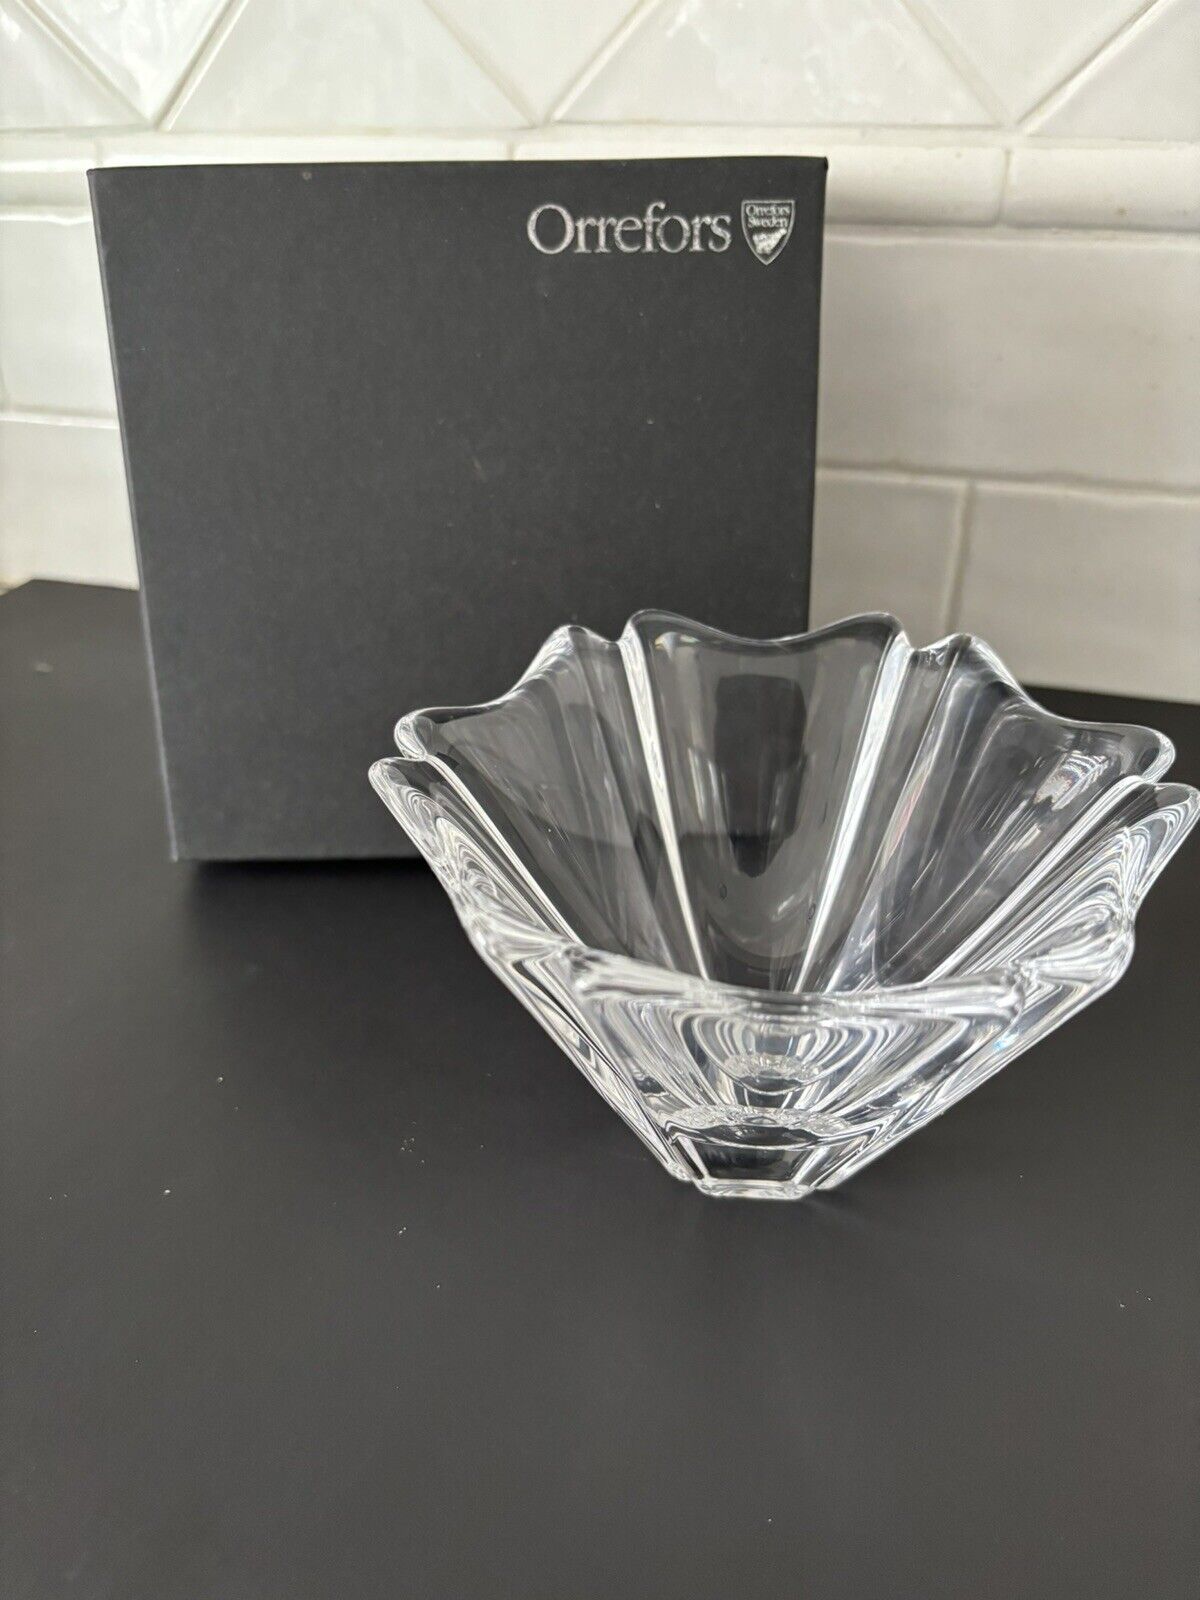 Orrefors Crystal Glass Orion Bowl, Made in Sweden